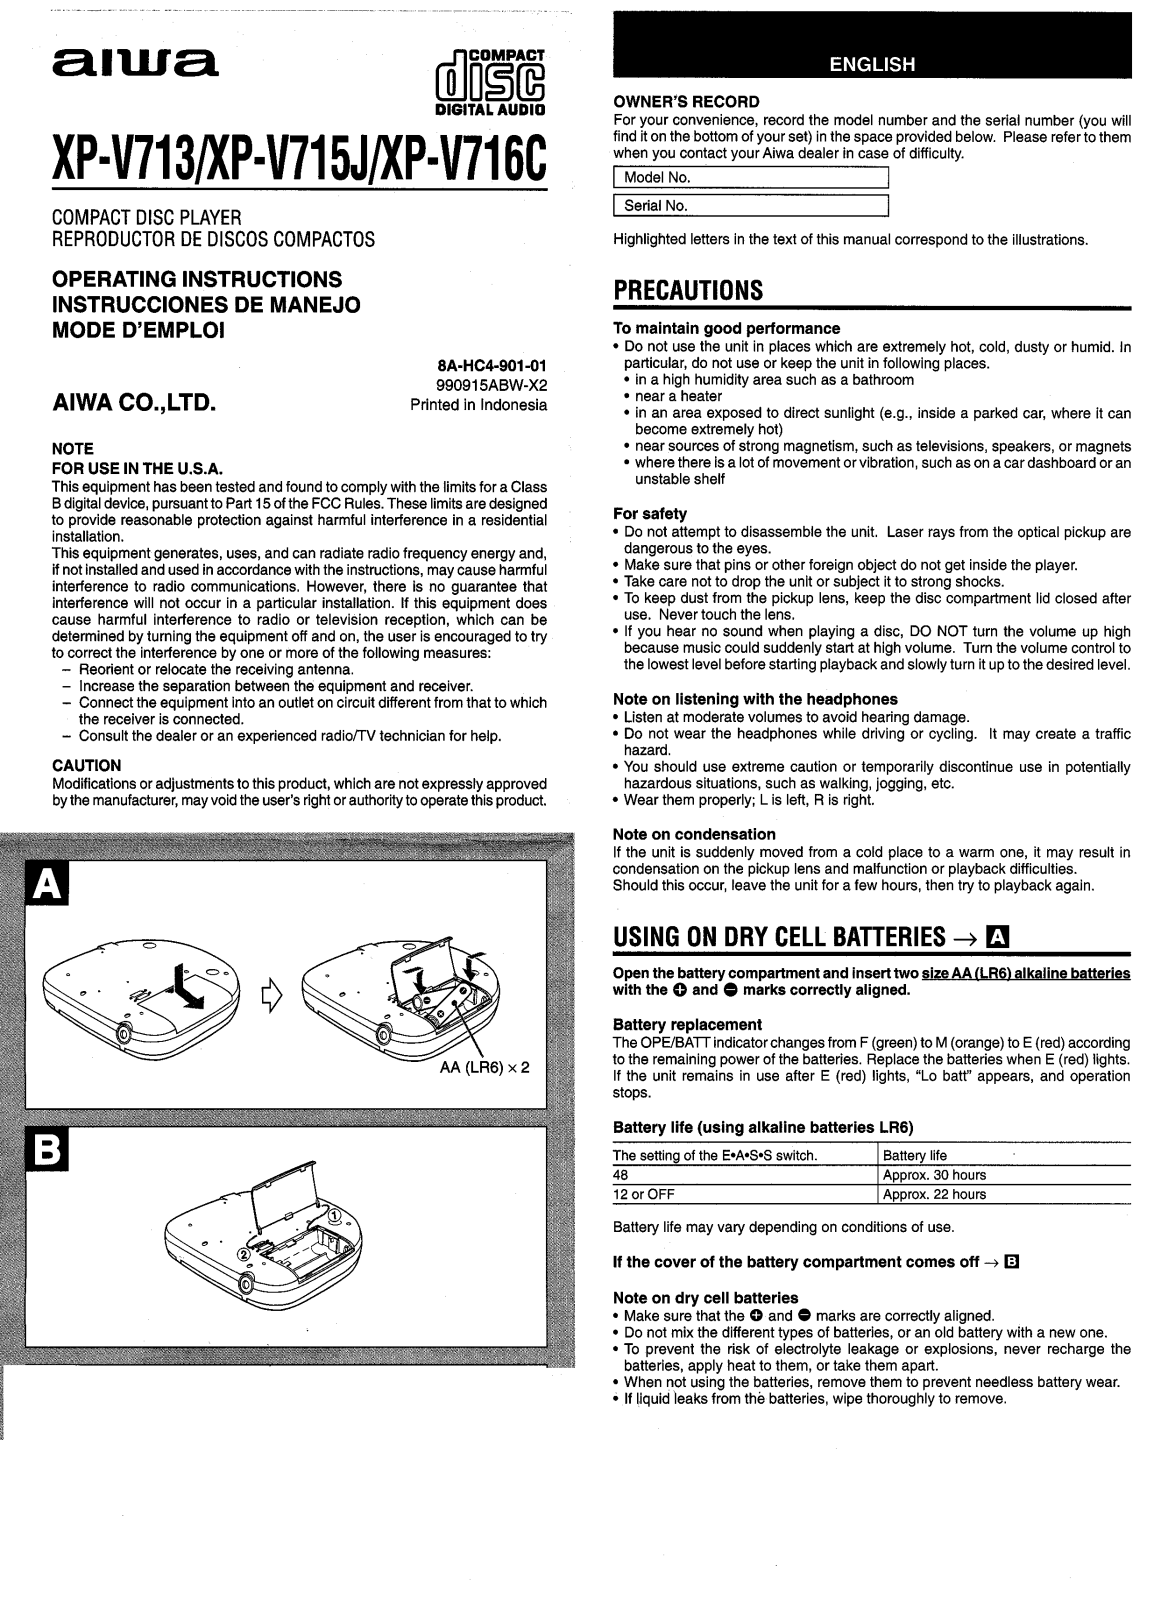 Sony XPV713 User Manual